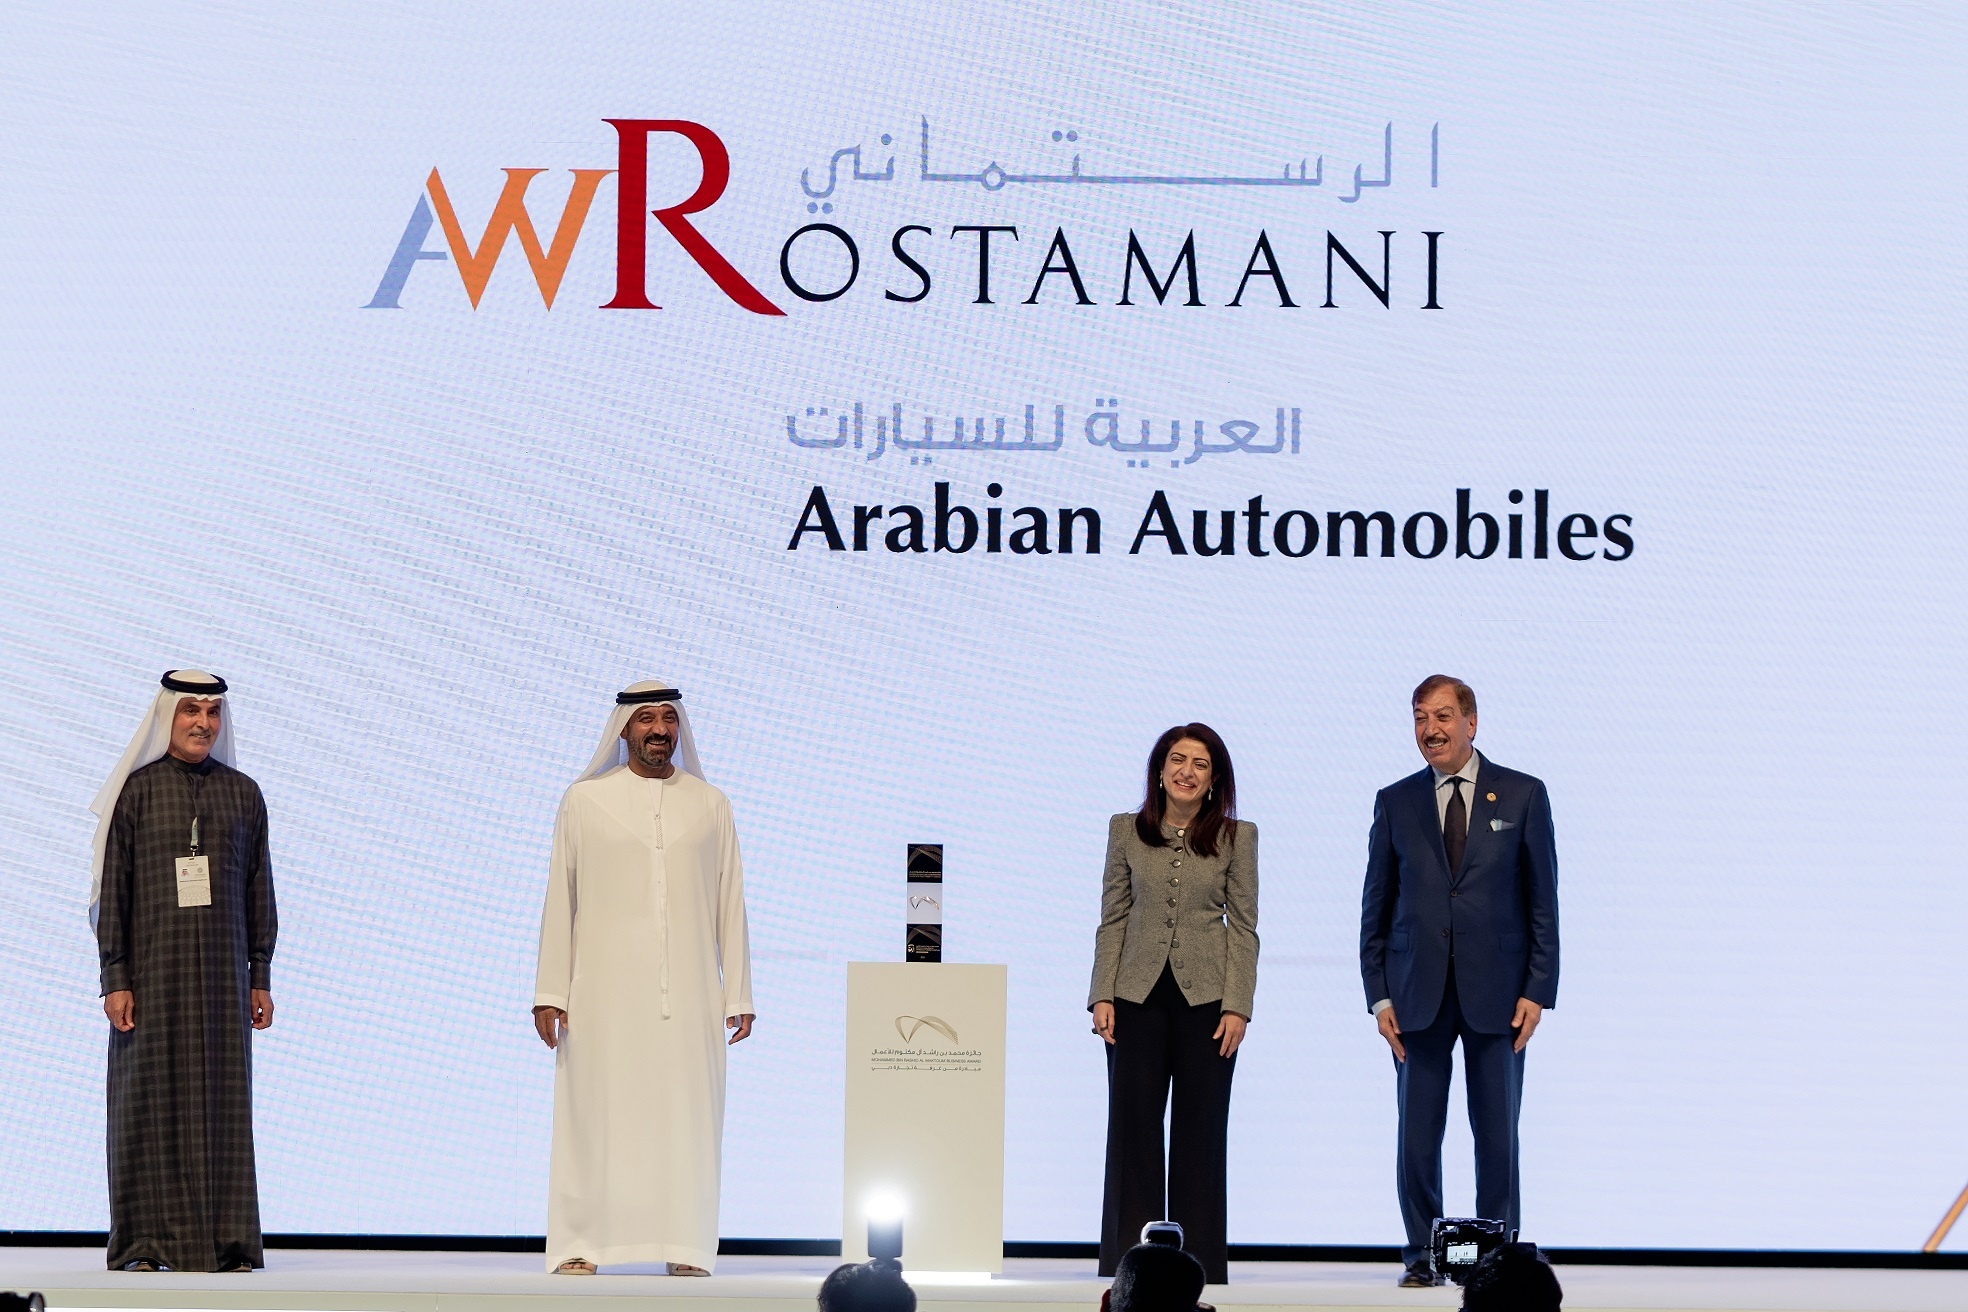 Arabian Automobiles awarded at Mohammed Bin Rashid Al Maktoum Awards for business, innovation and customer excellence